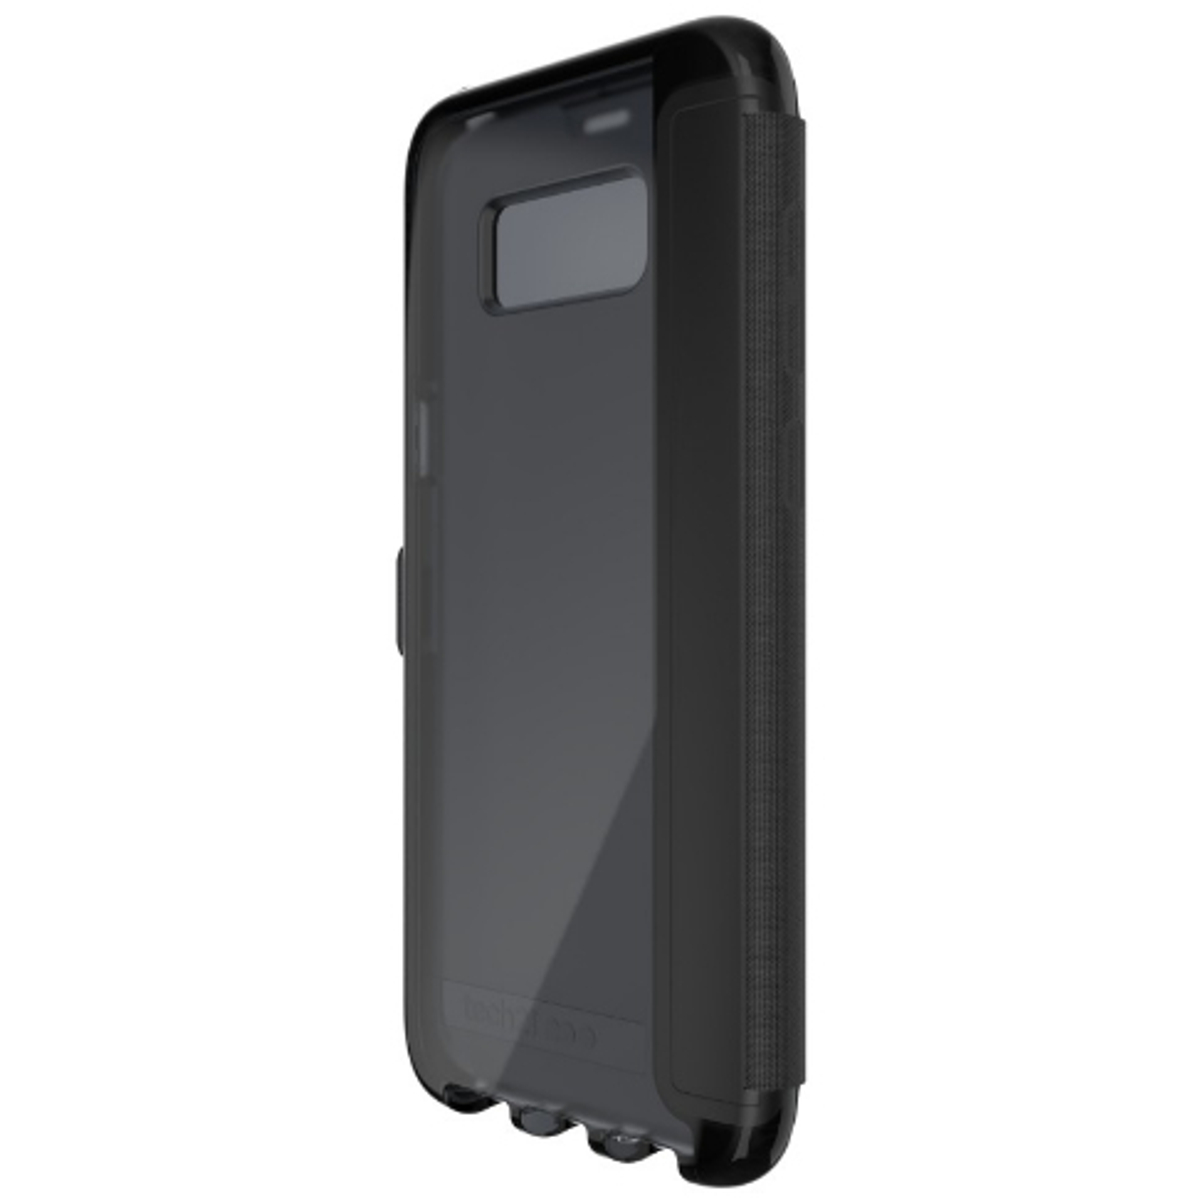 Evo Wallet for Galaxy S8+ - Black